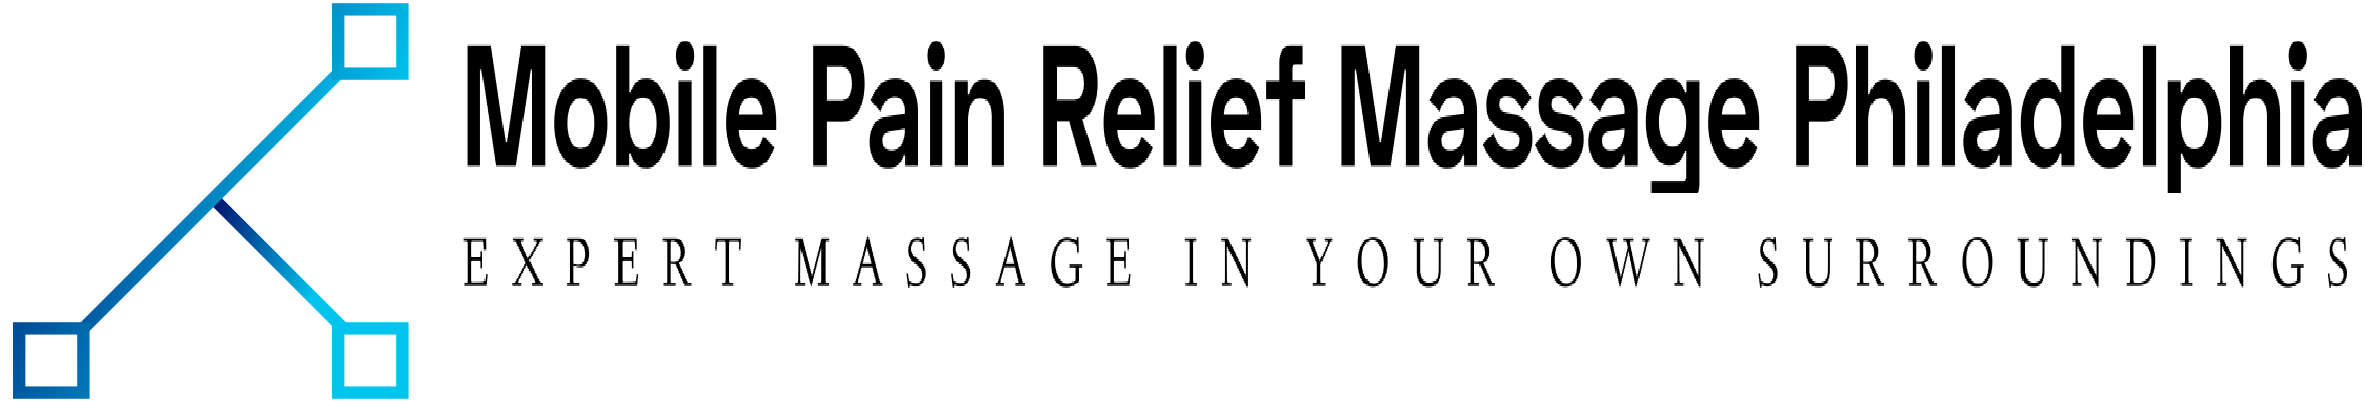 Mobile Pain Relief Massage Philadelphia